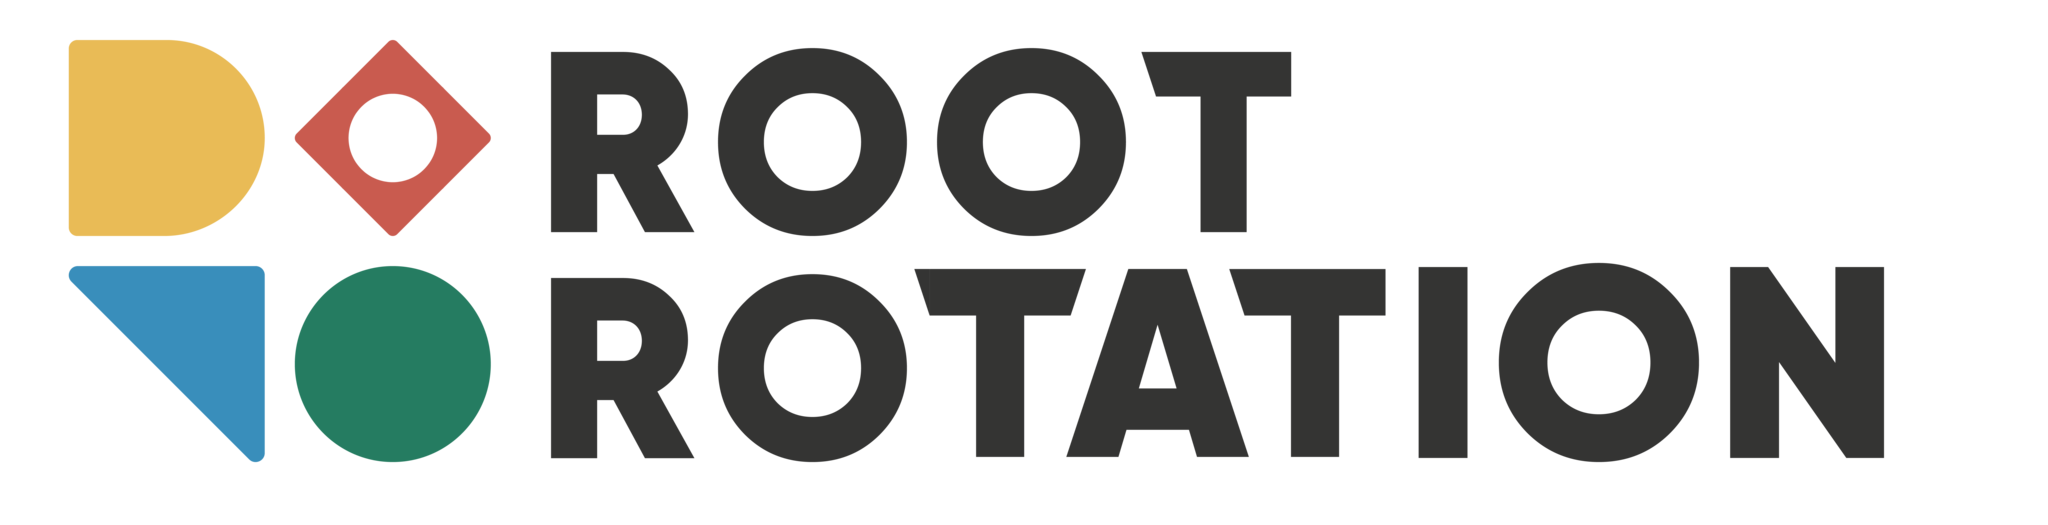 Root Rotation